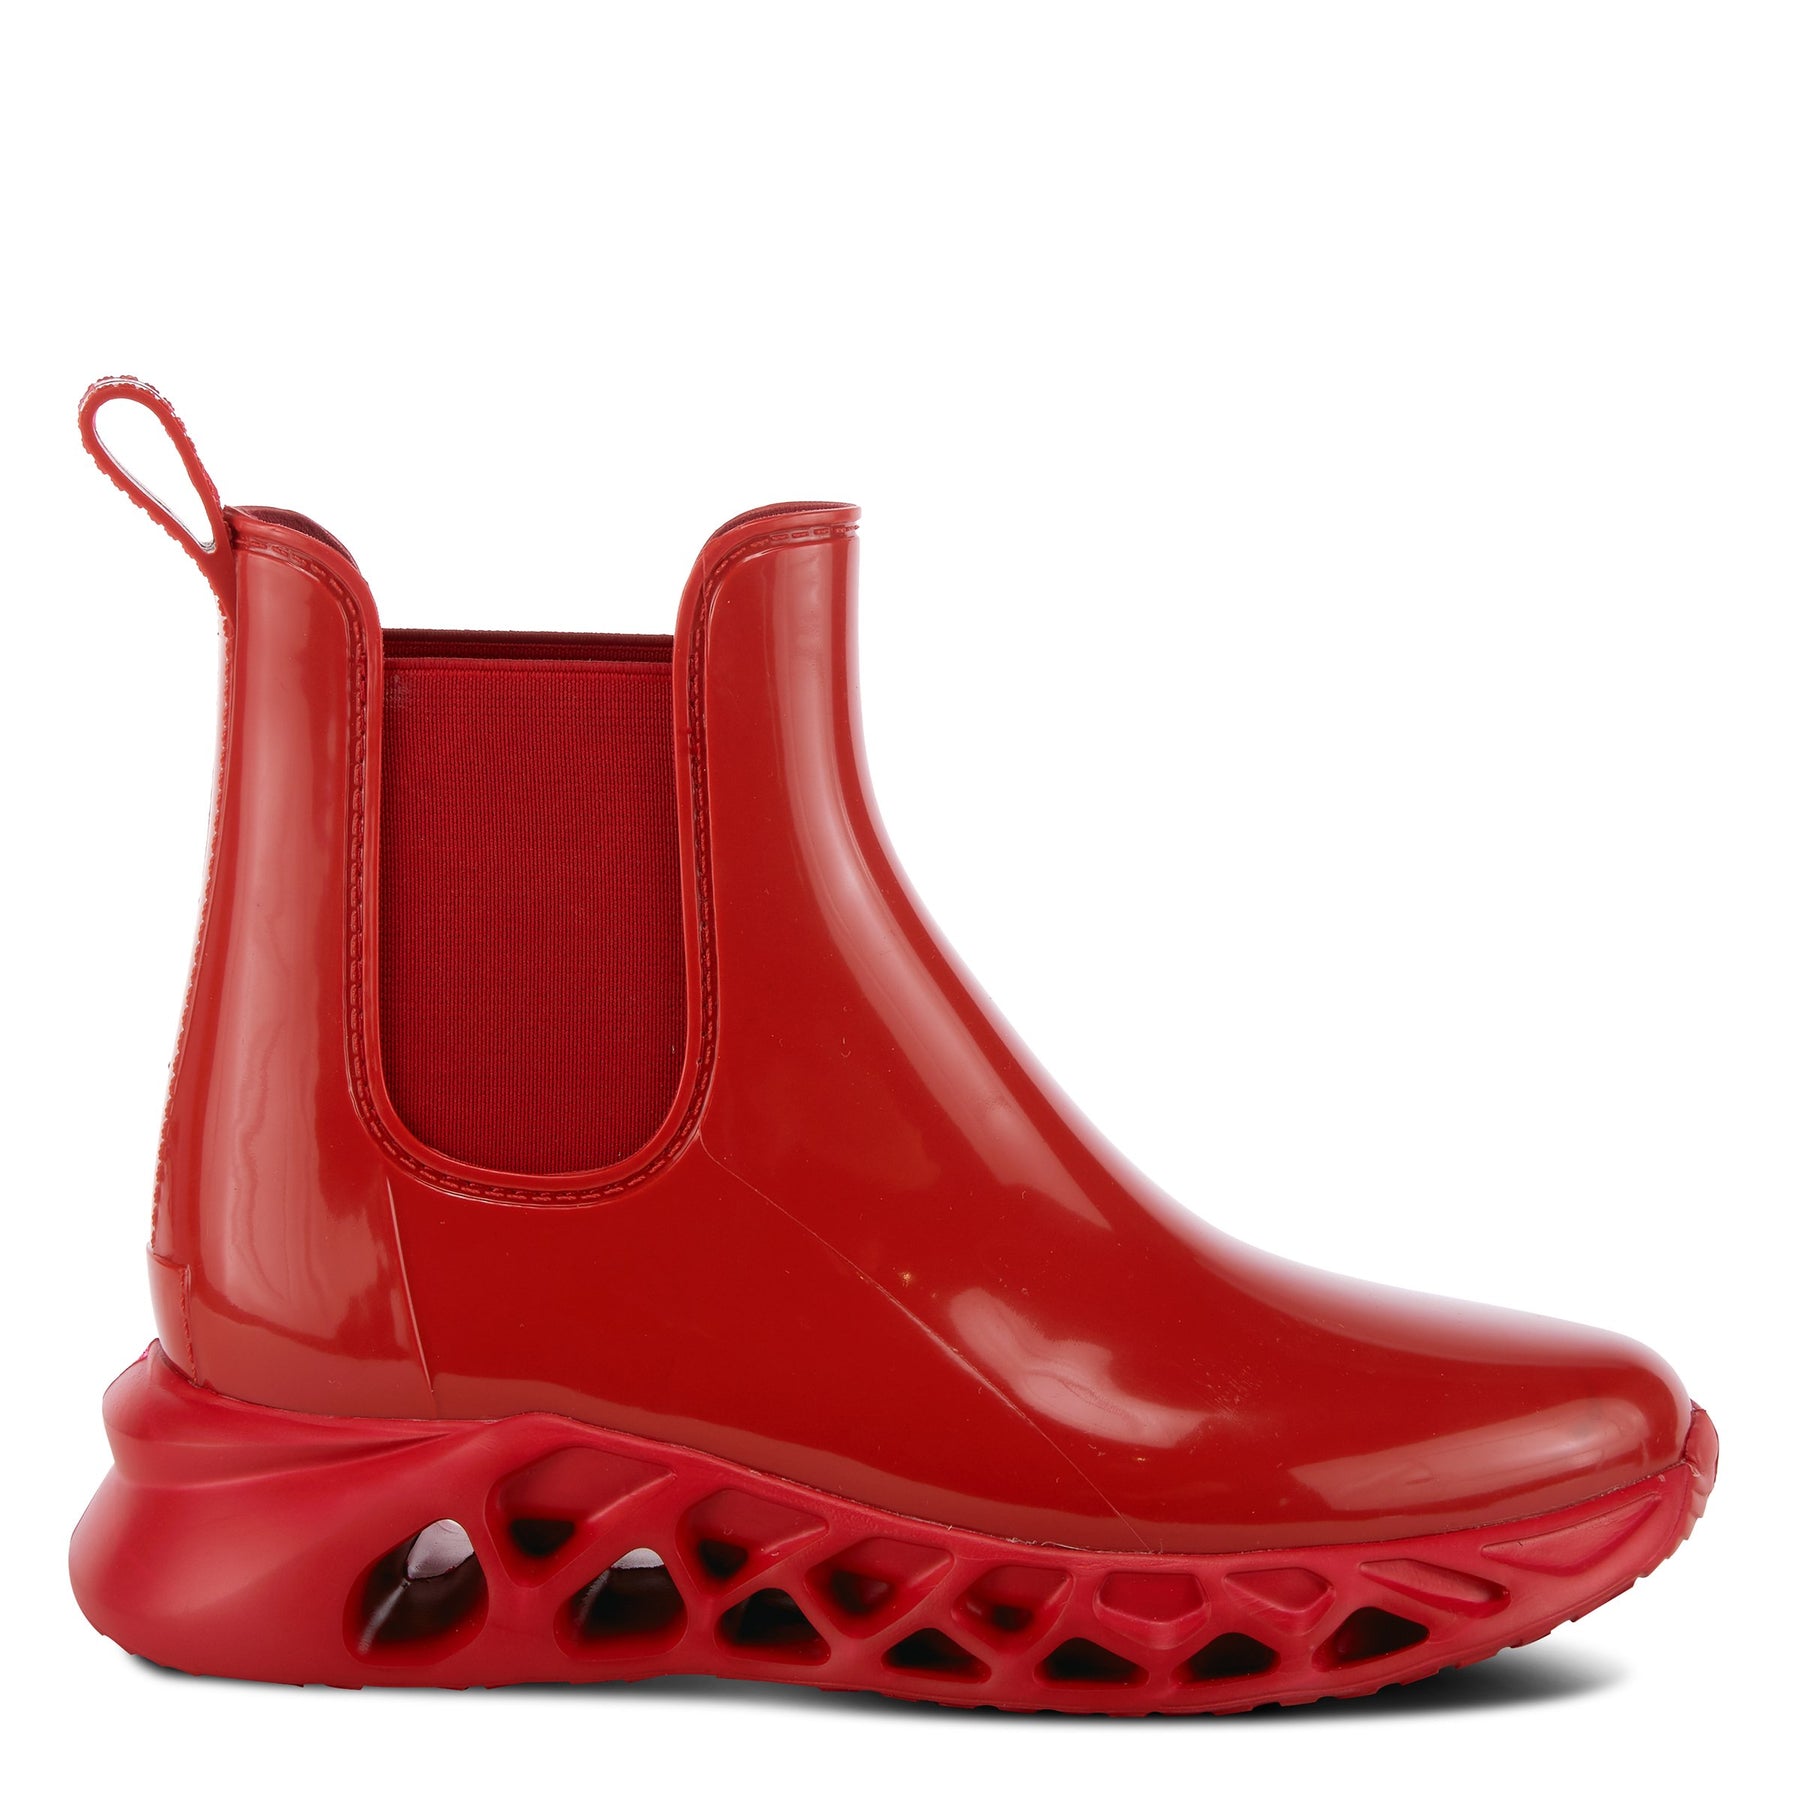 Prada Mid-Calf Rain Boots - Size 38